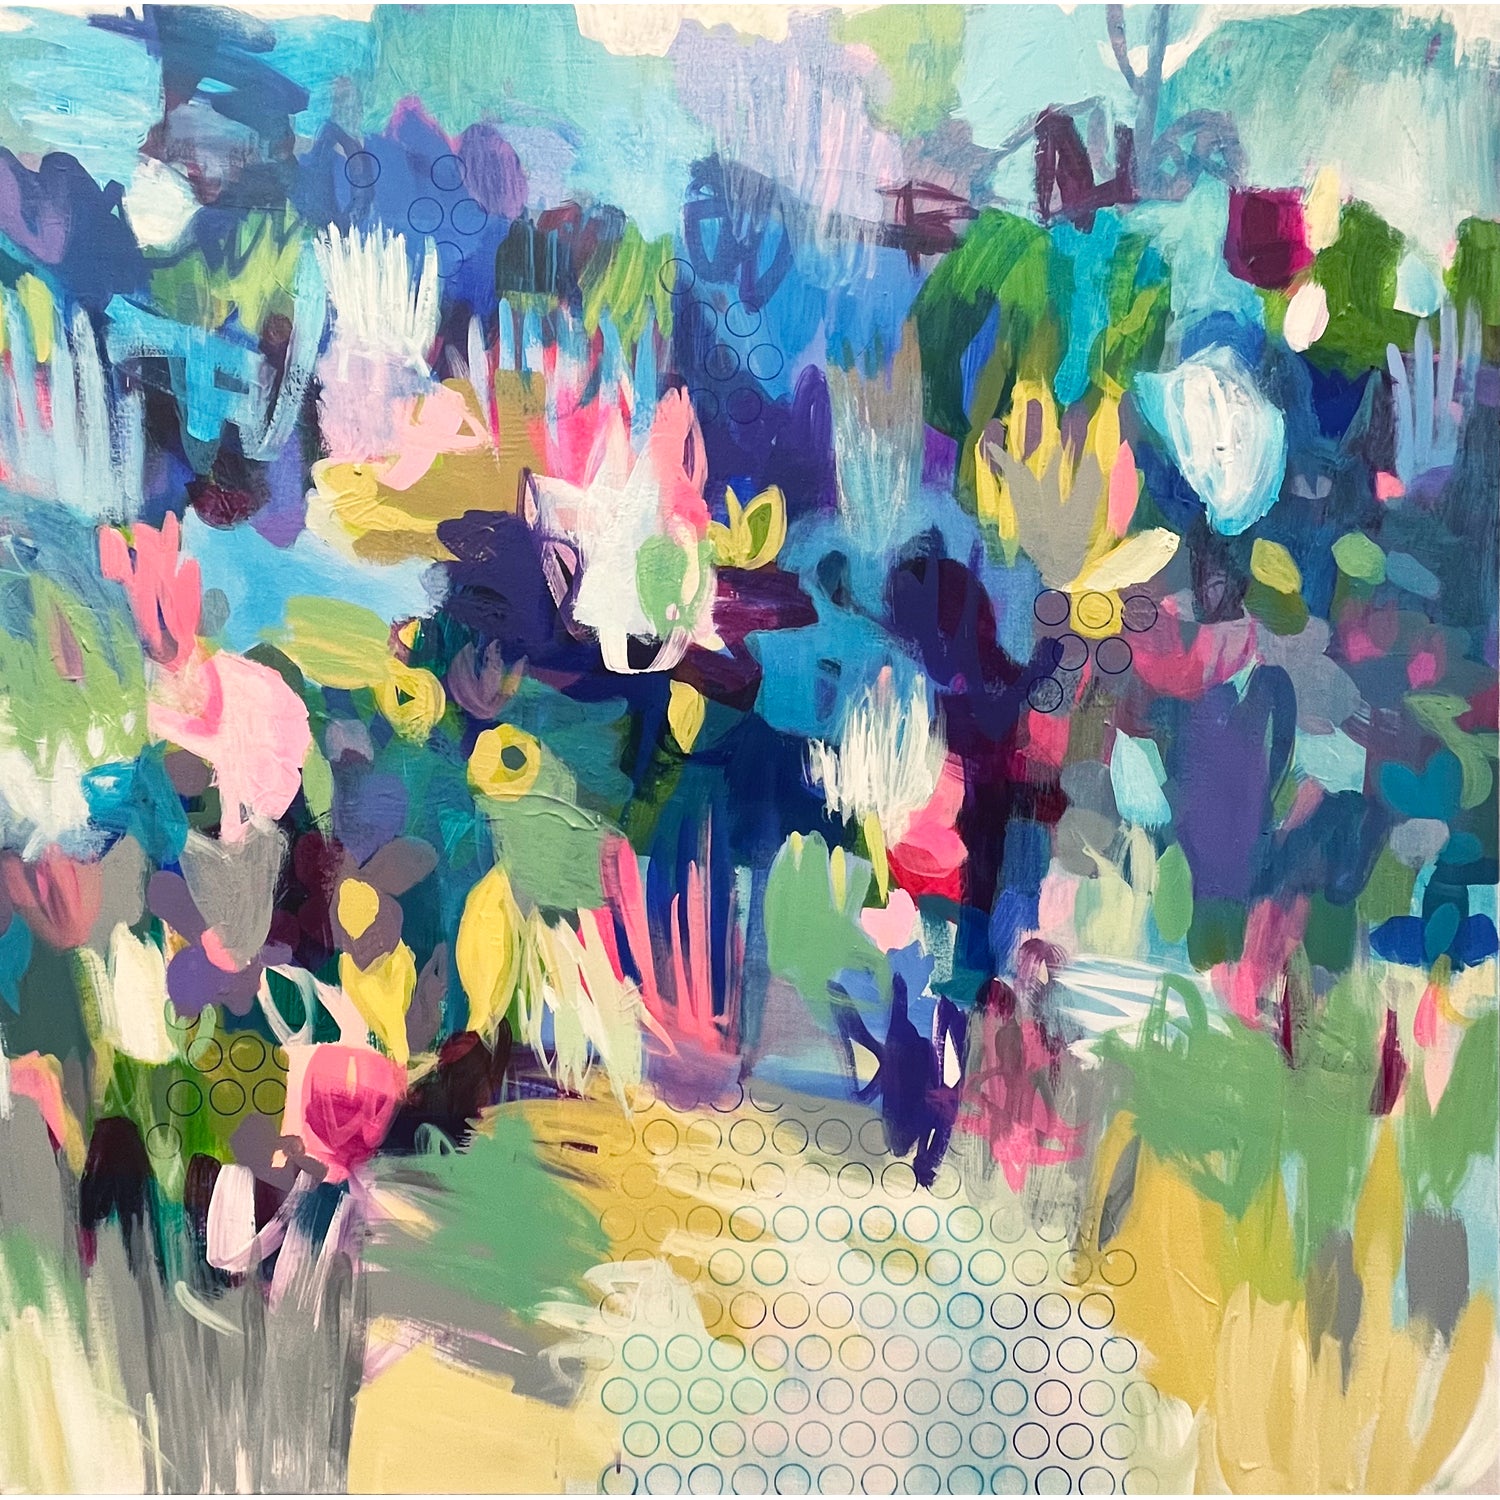 Callie Gray - Cartwheels in Flowers, 48" x 48"